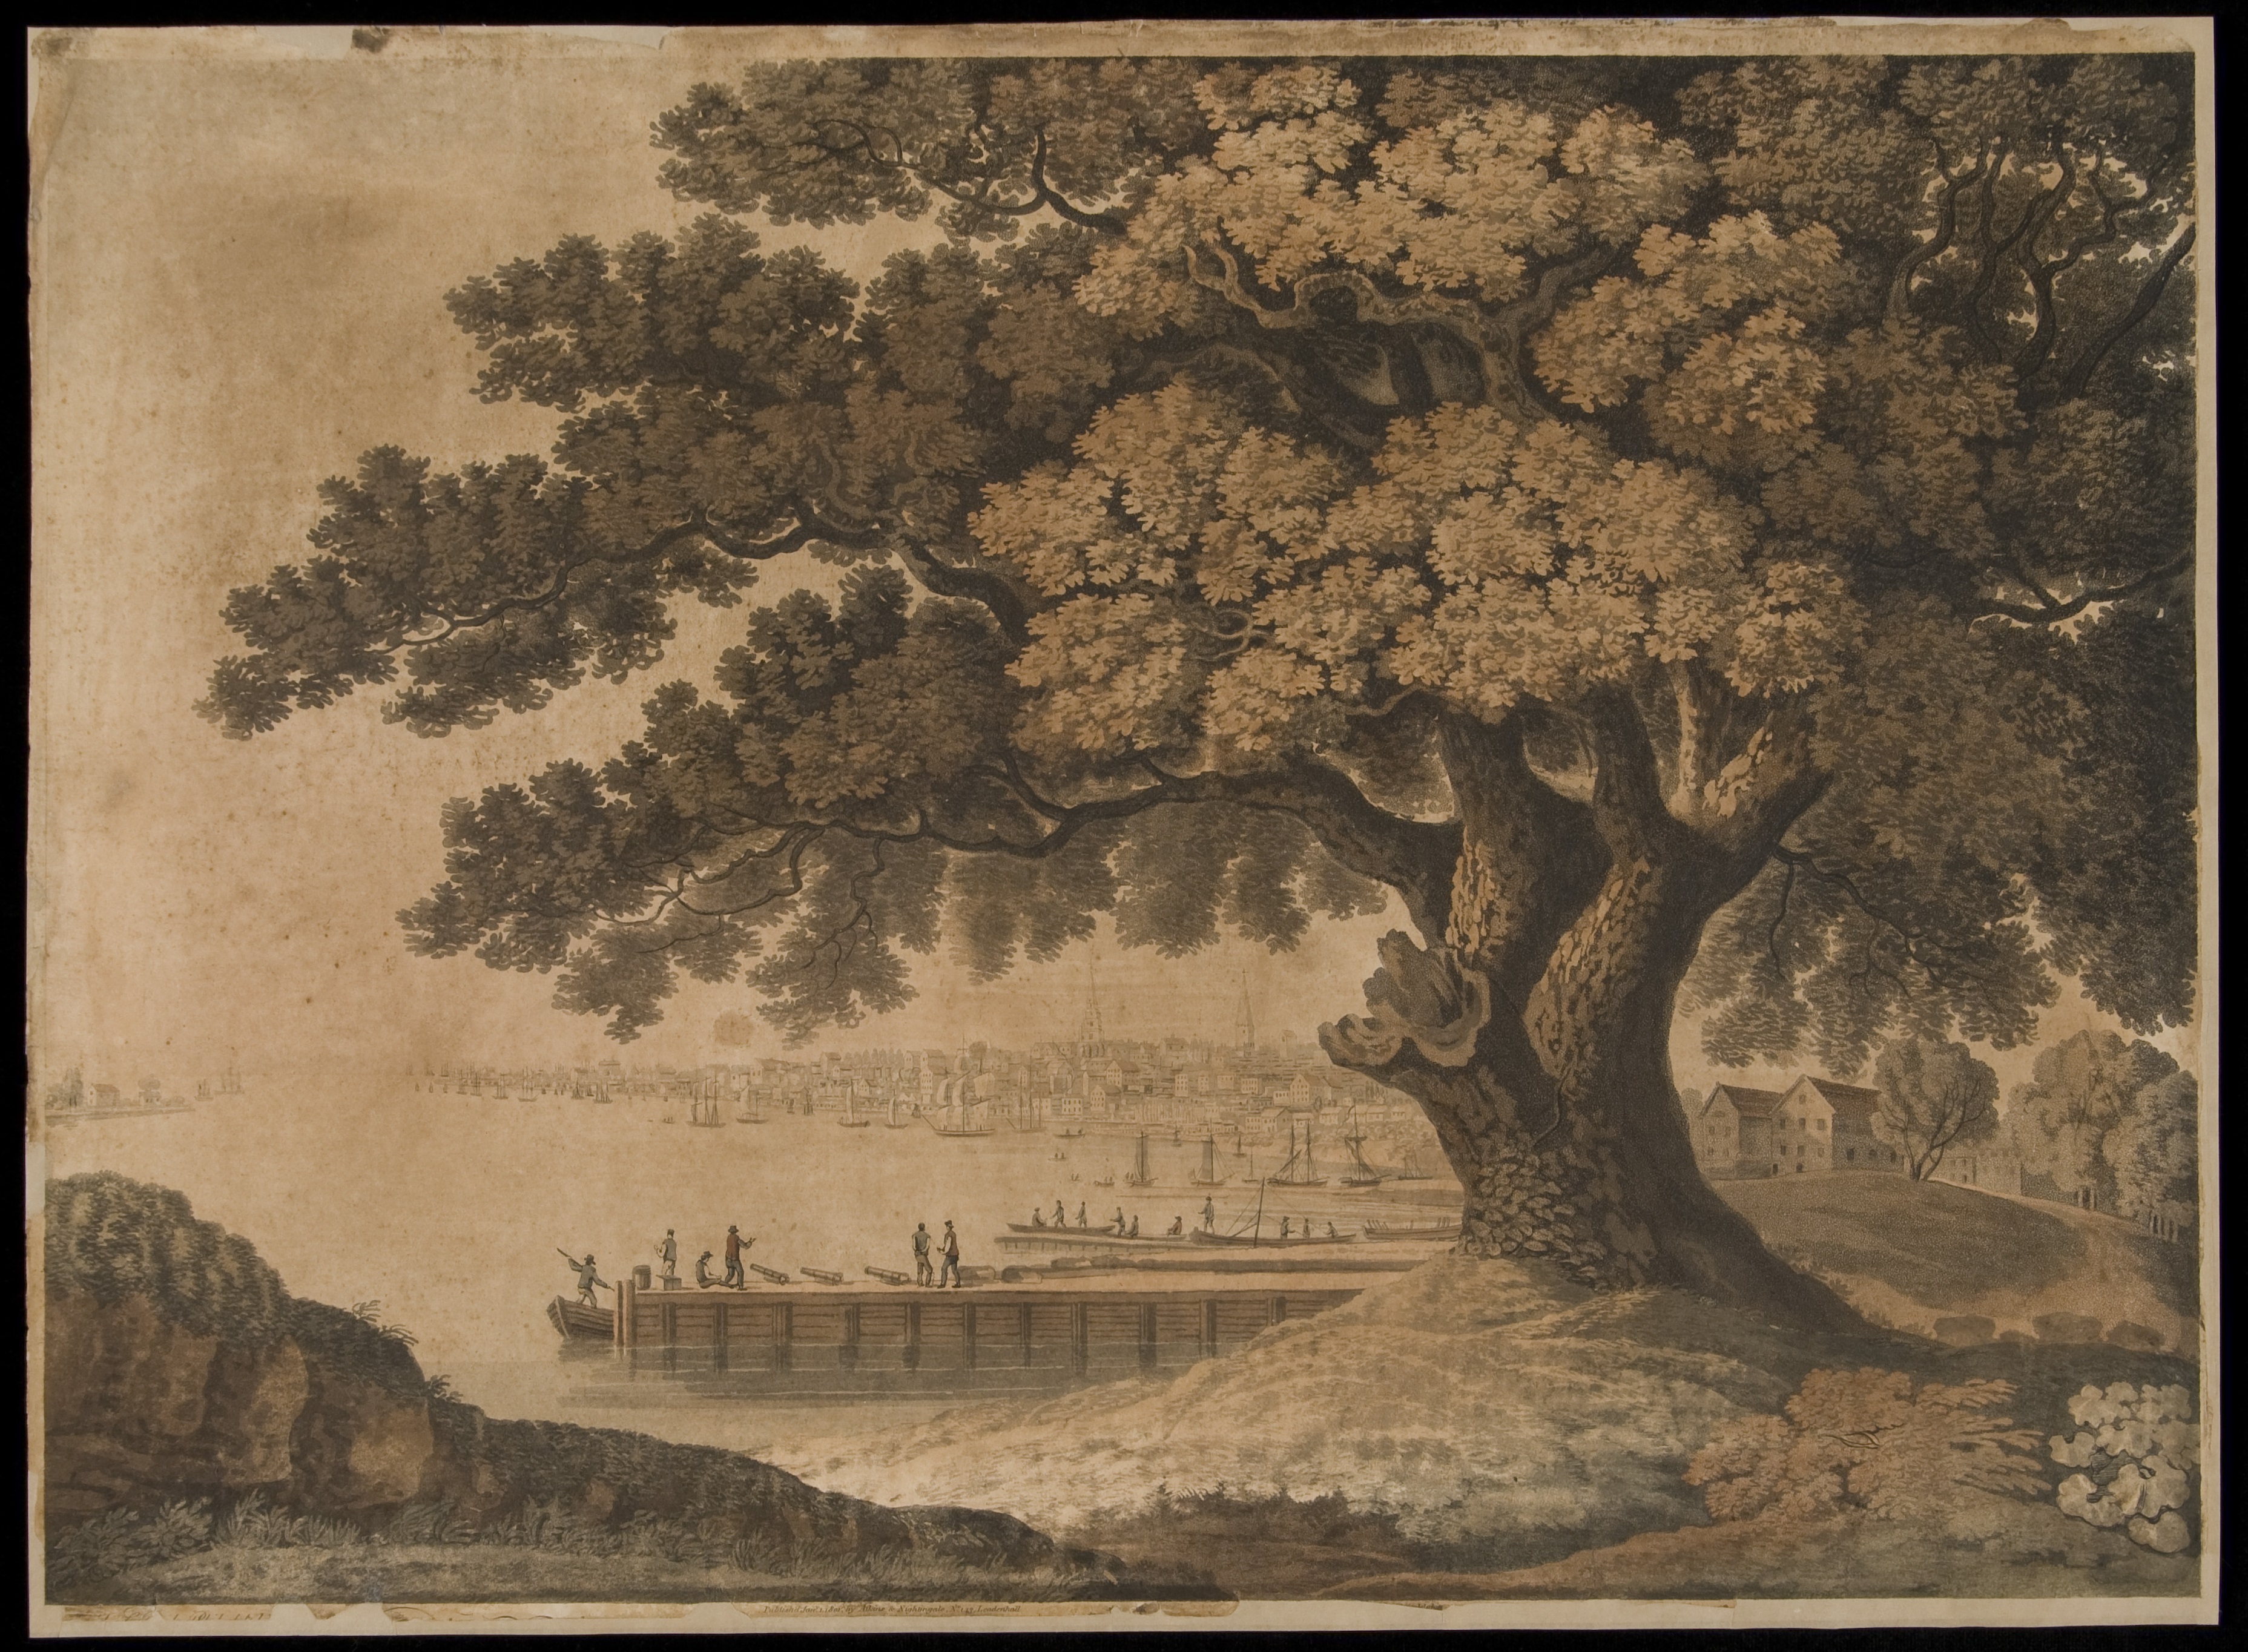 Philadelphia, from the Great Tree at Kensington